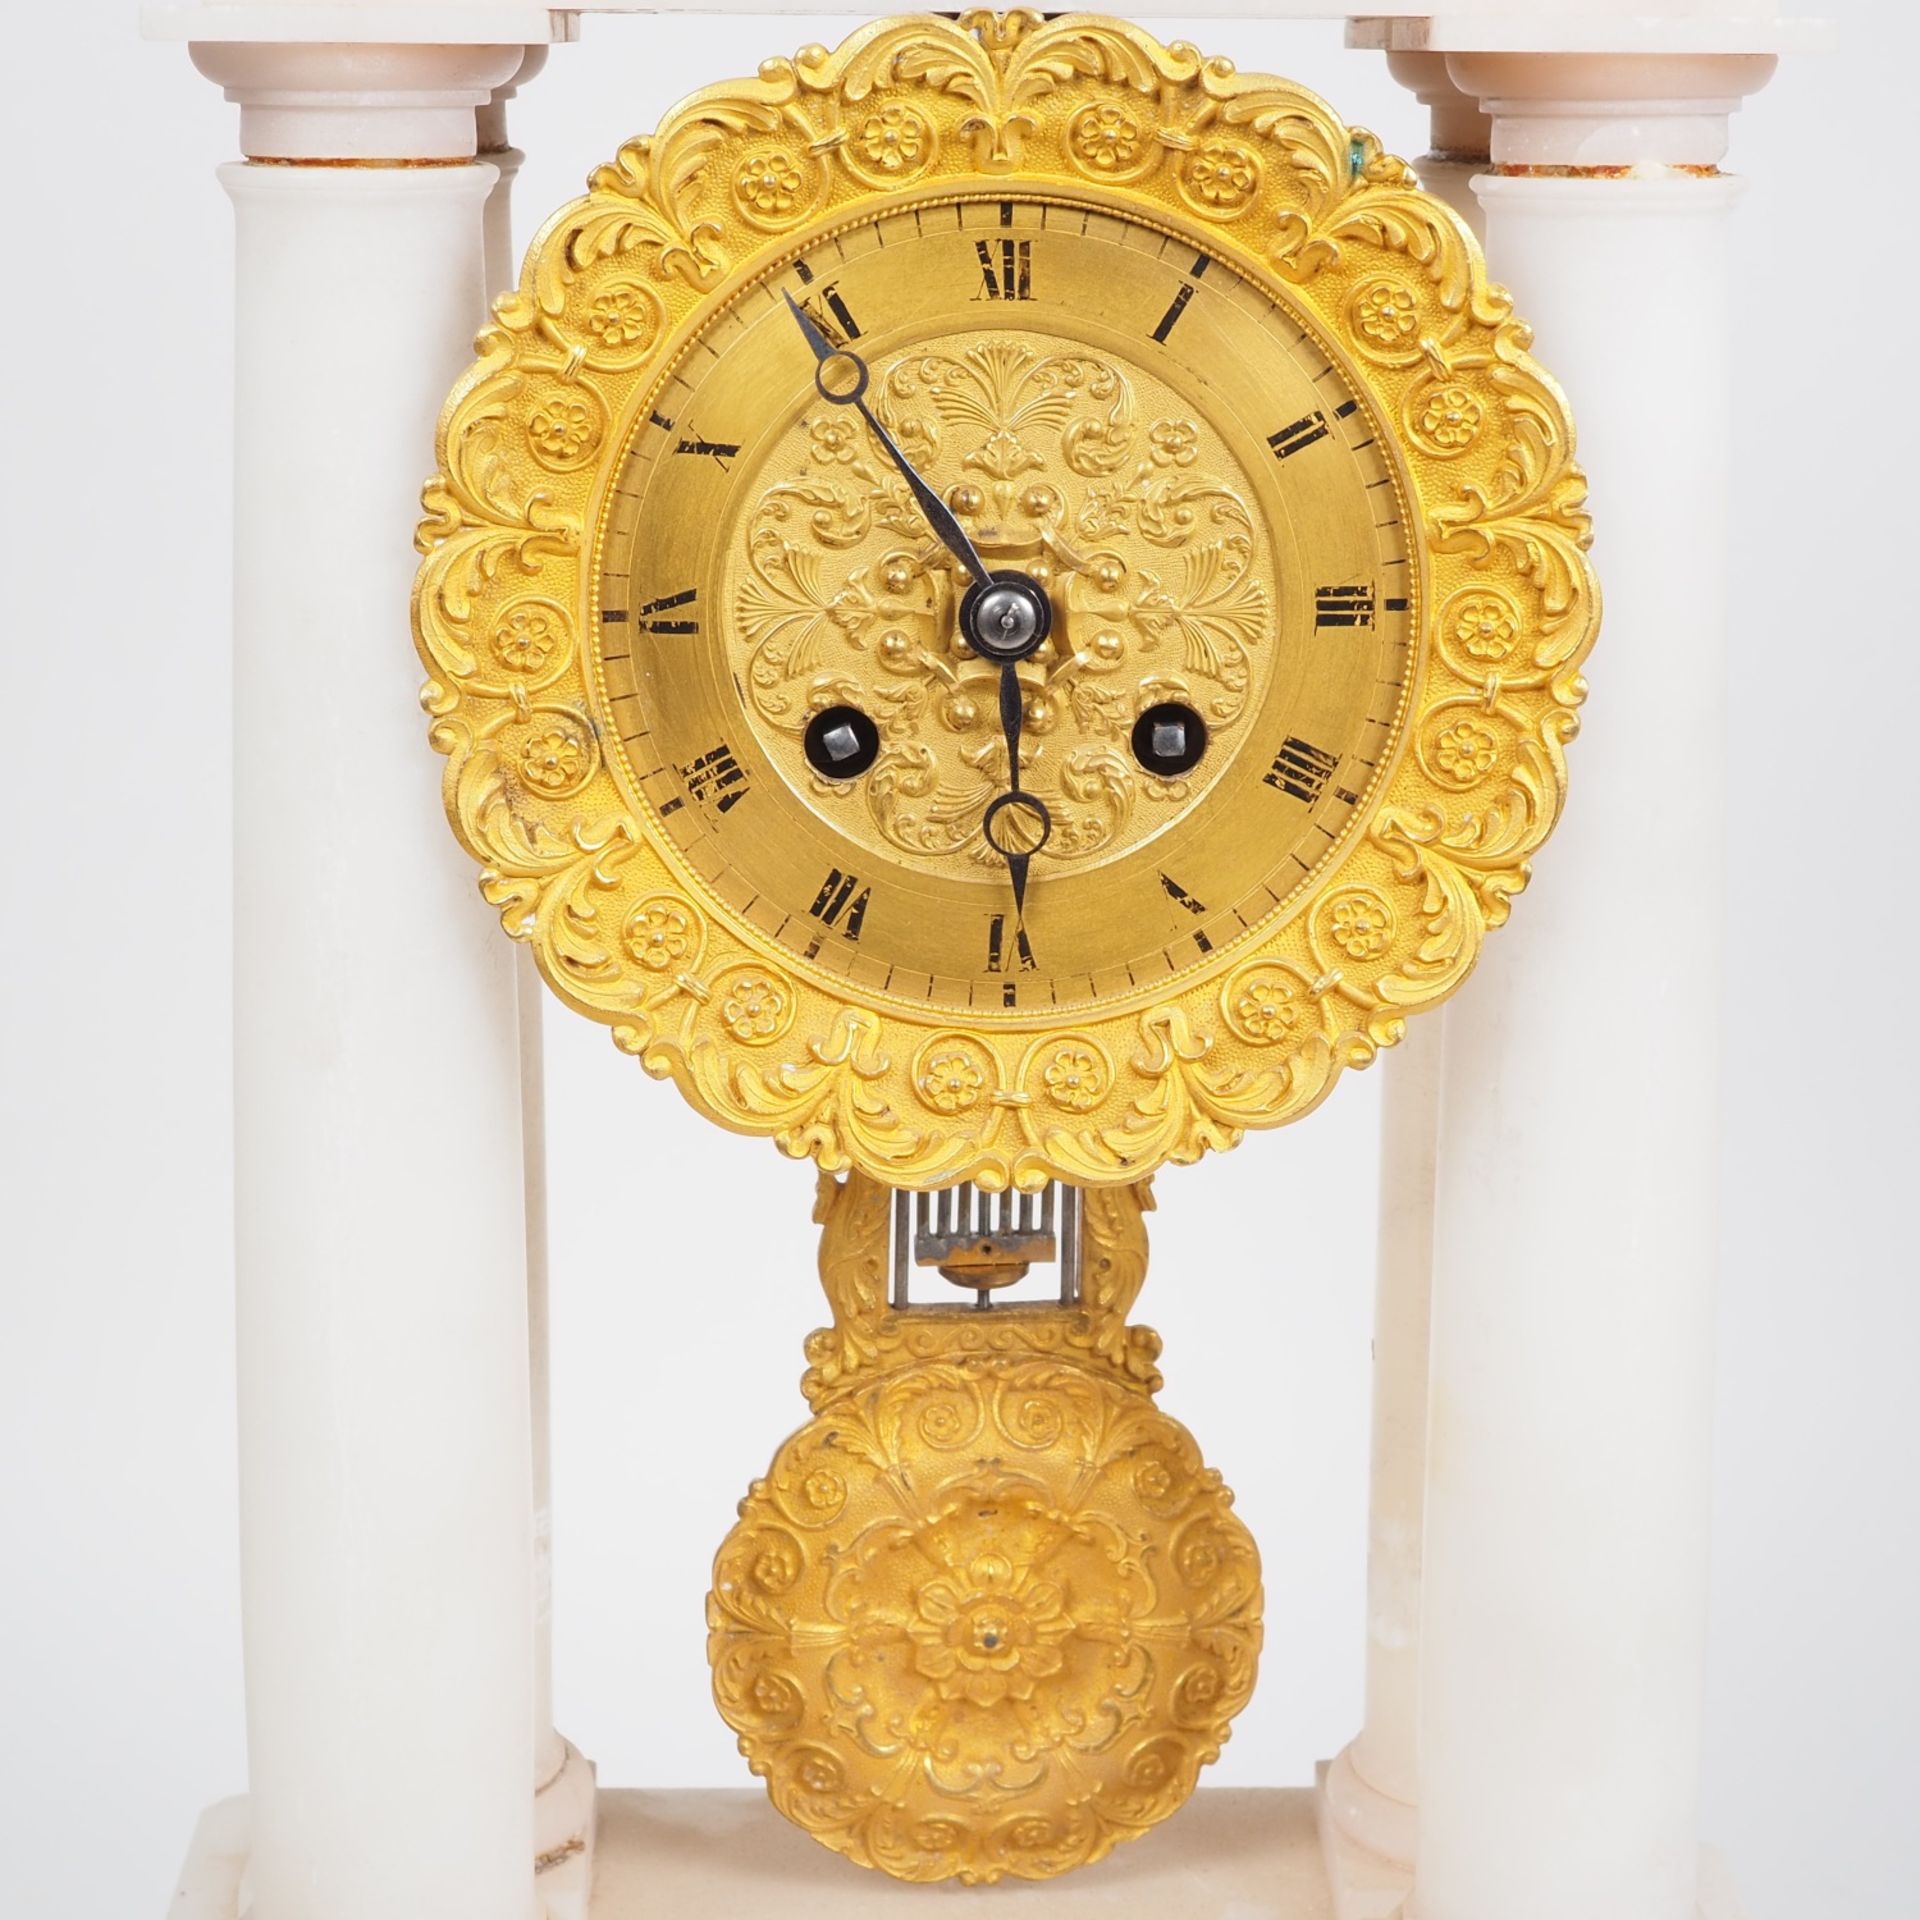 French mantel clock, around 1870 - Image 3 of 5